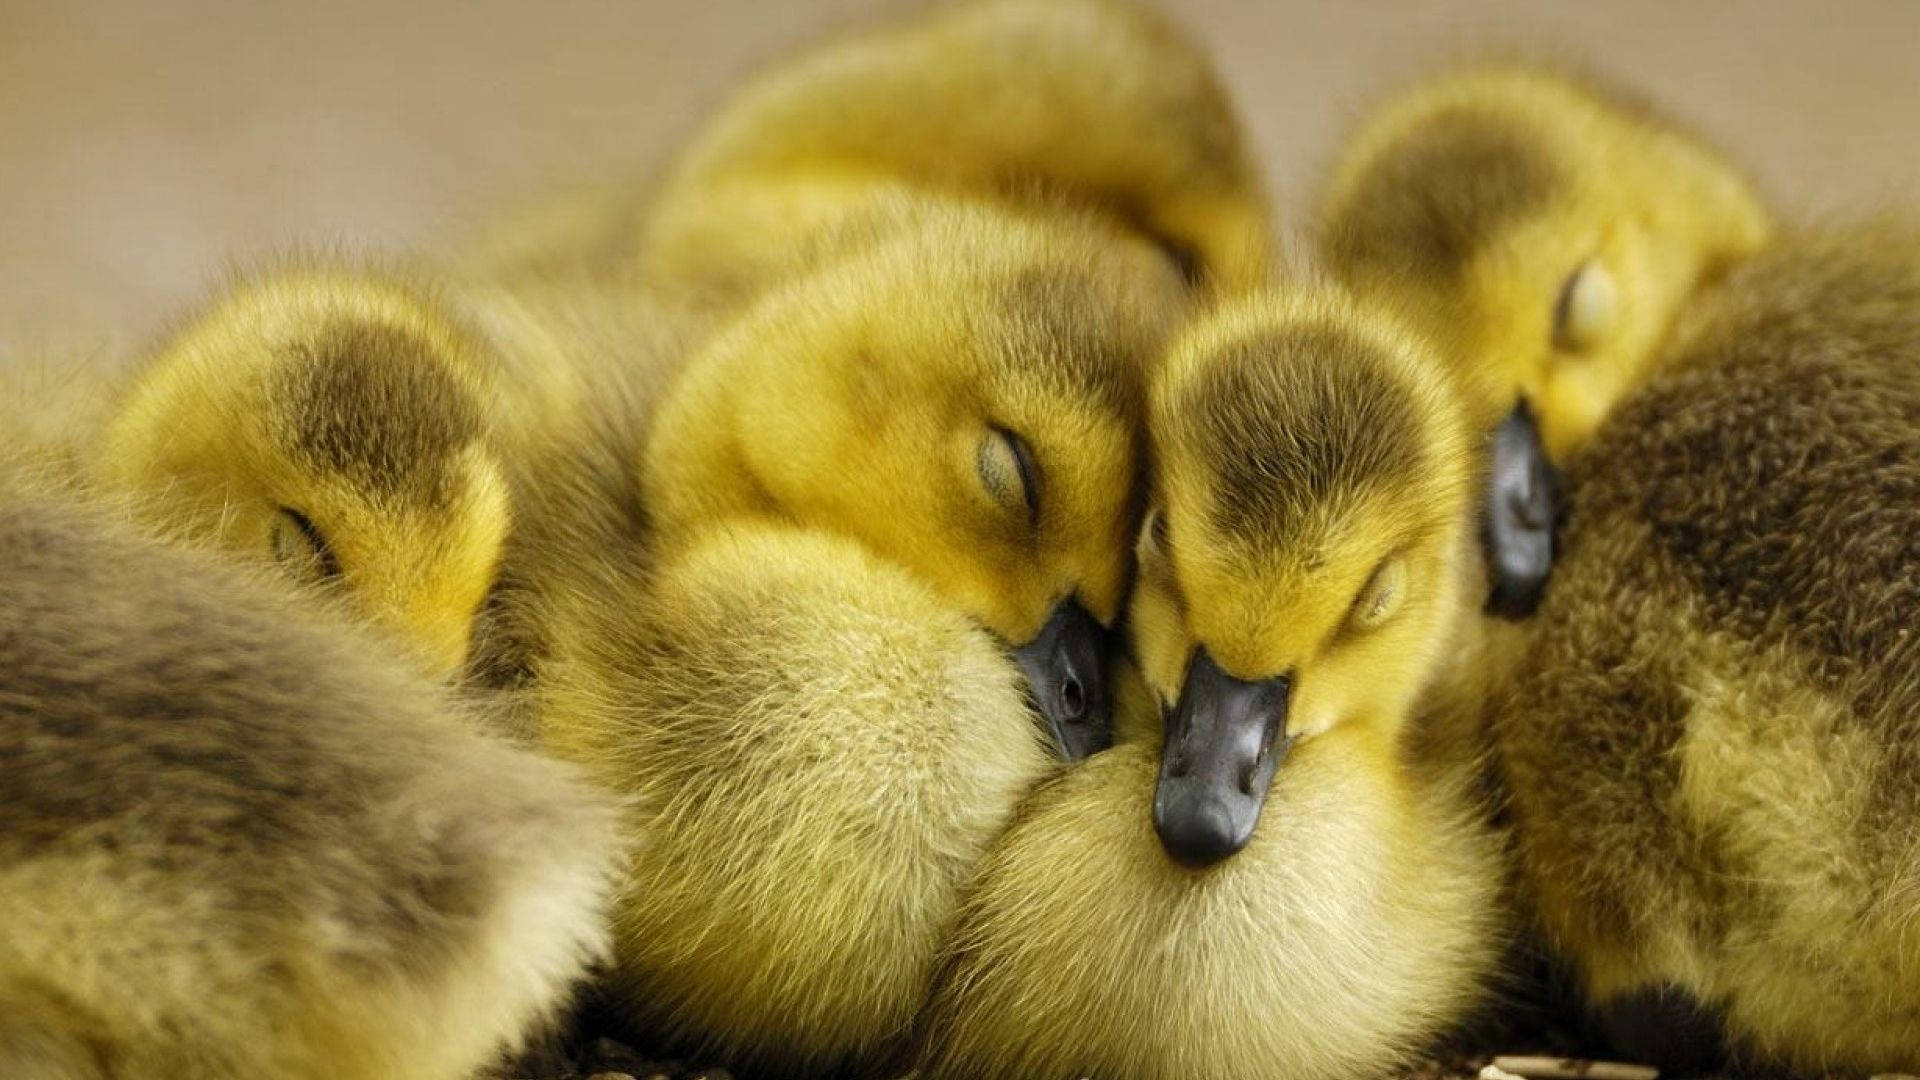 Sleeping Baby Ducks